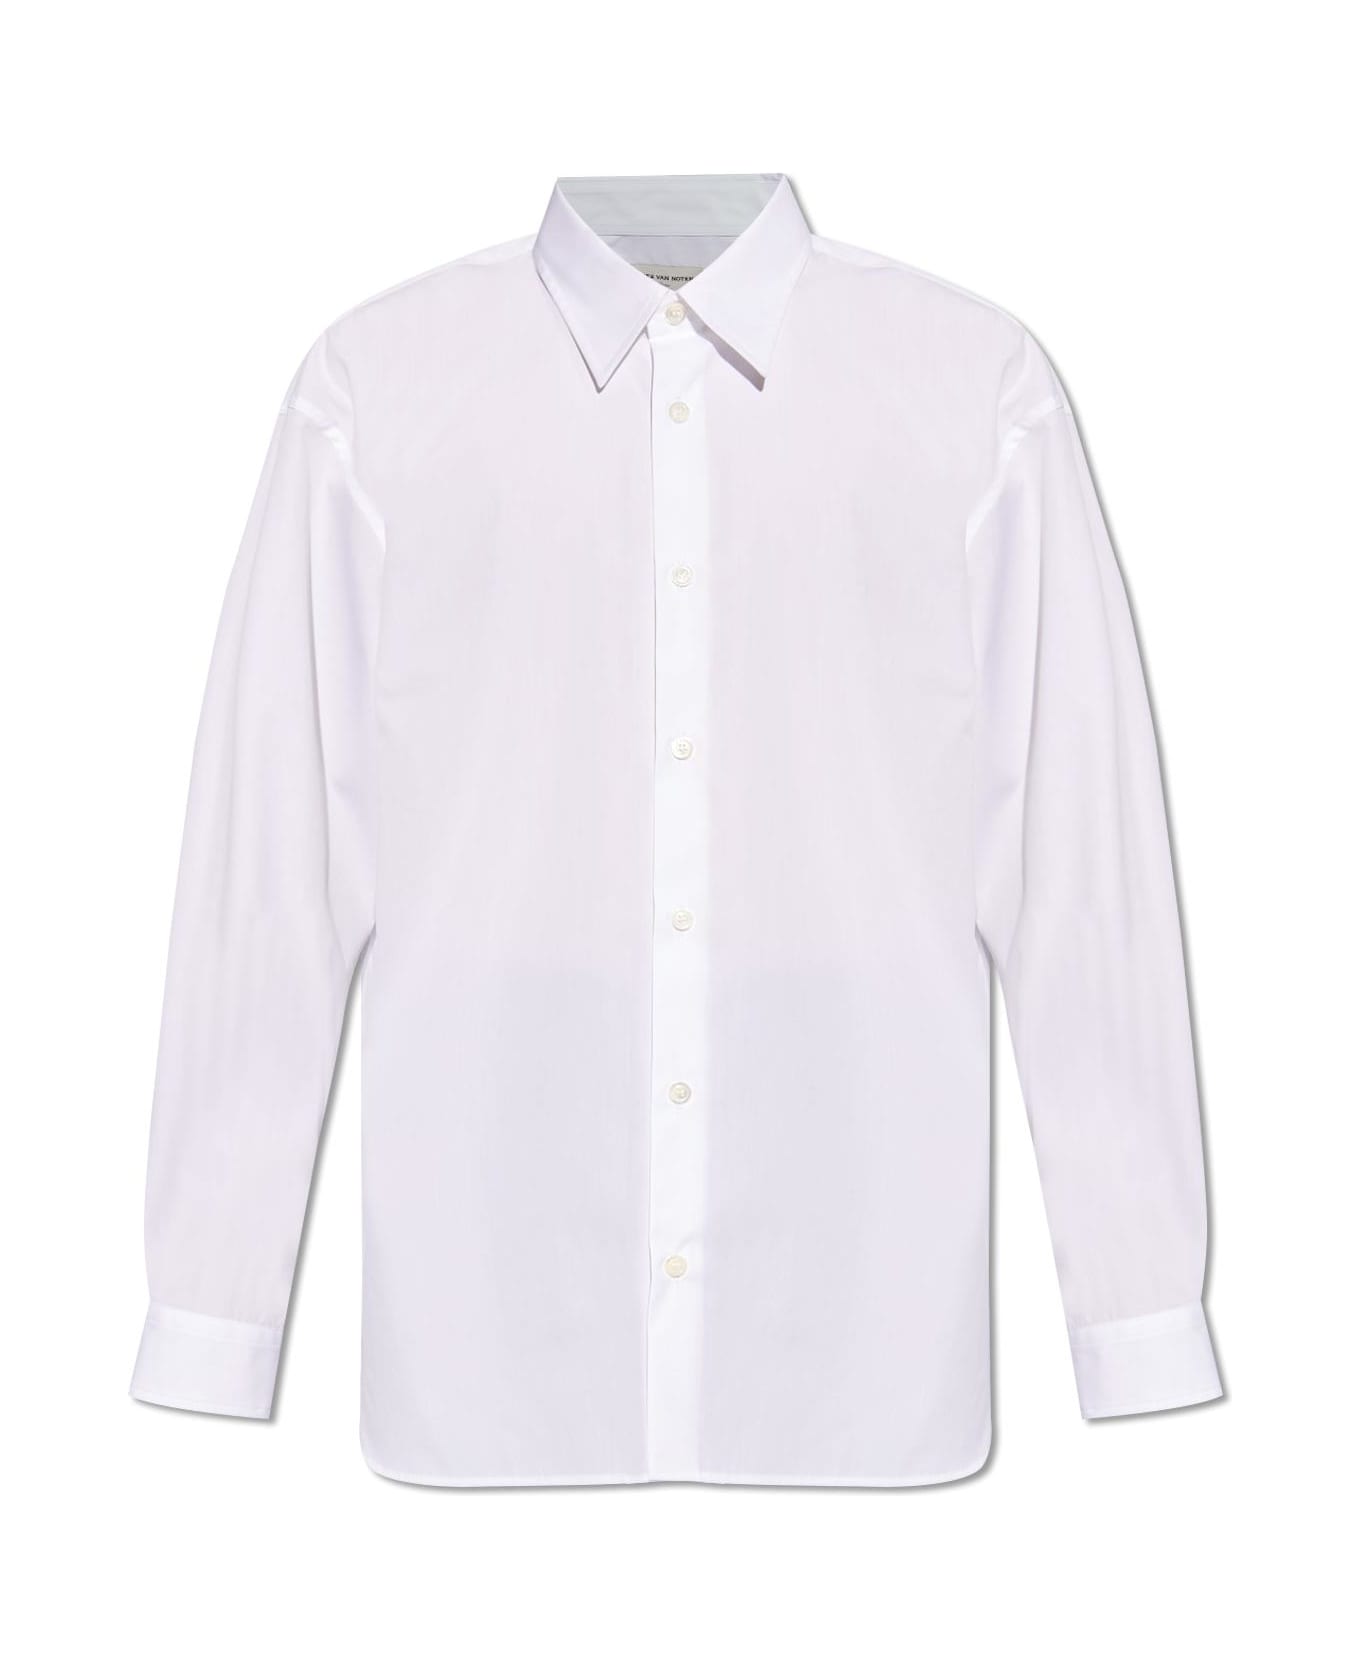 Dries Van Noten Shirt With Pinstripes - WHITE